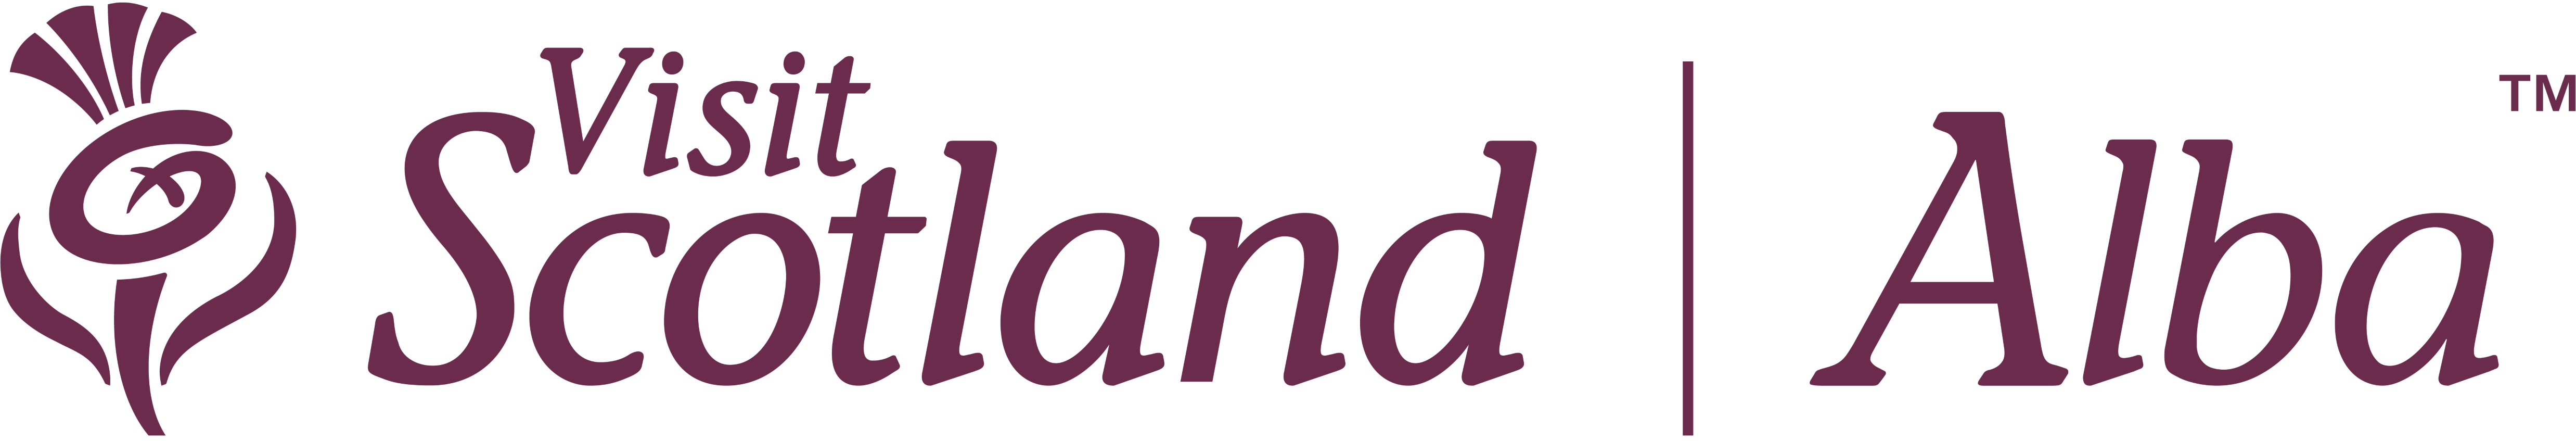 Visit Scotland Logo